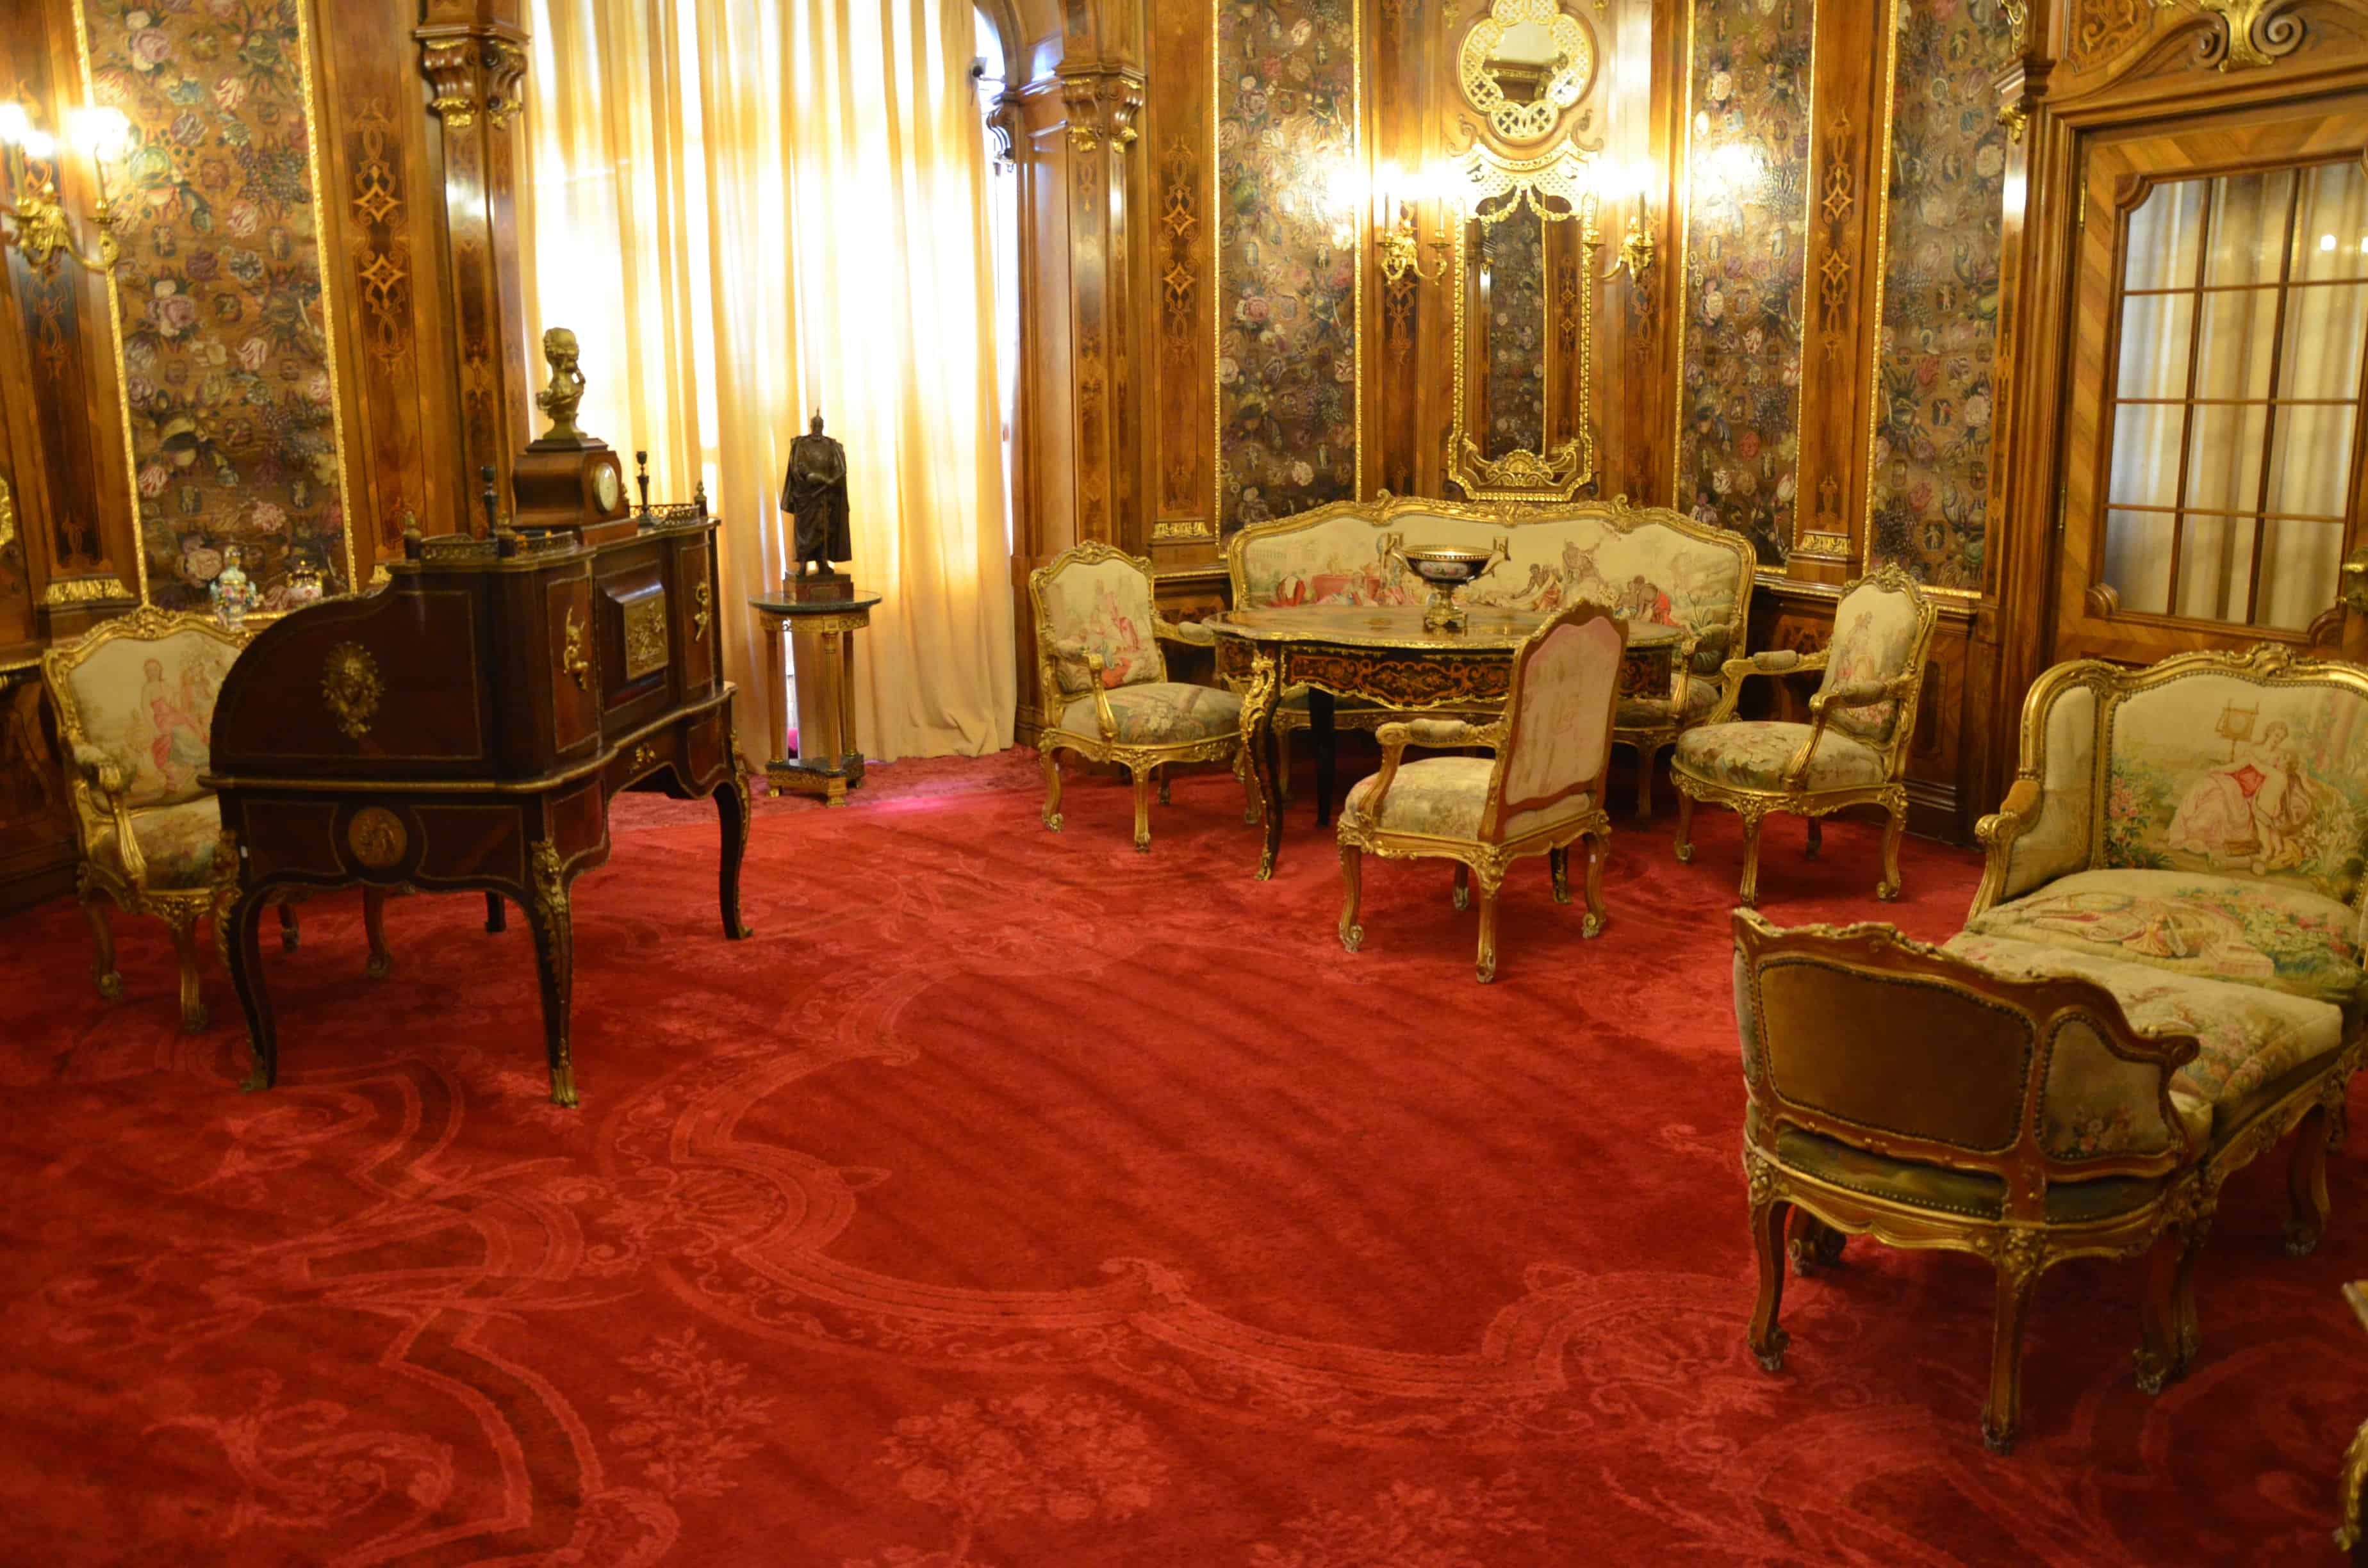 Queen's reception room at Peleș Castle in Sinaia, Romania